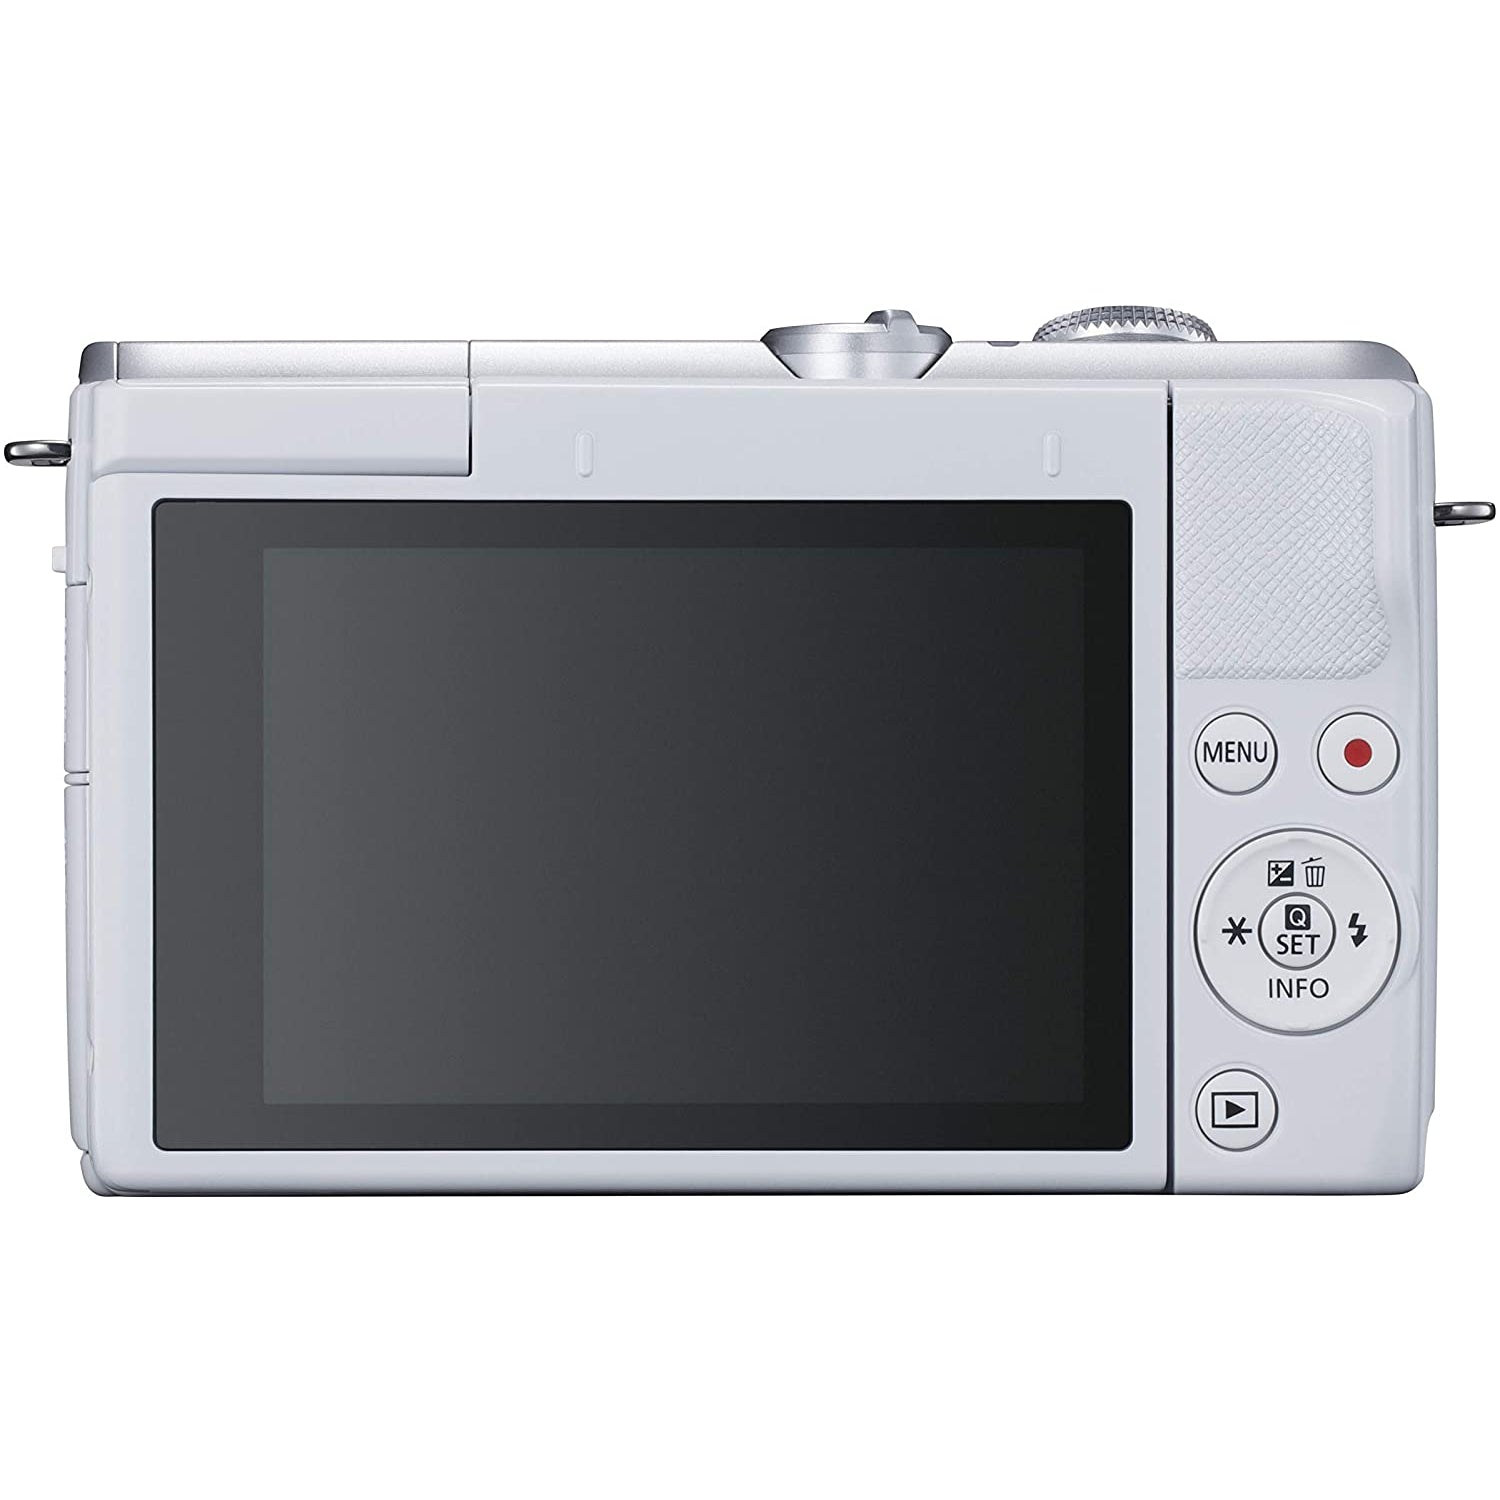 Canon EOS M200 Mirrorless Camera - White - Refurbished Excellent